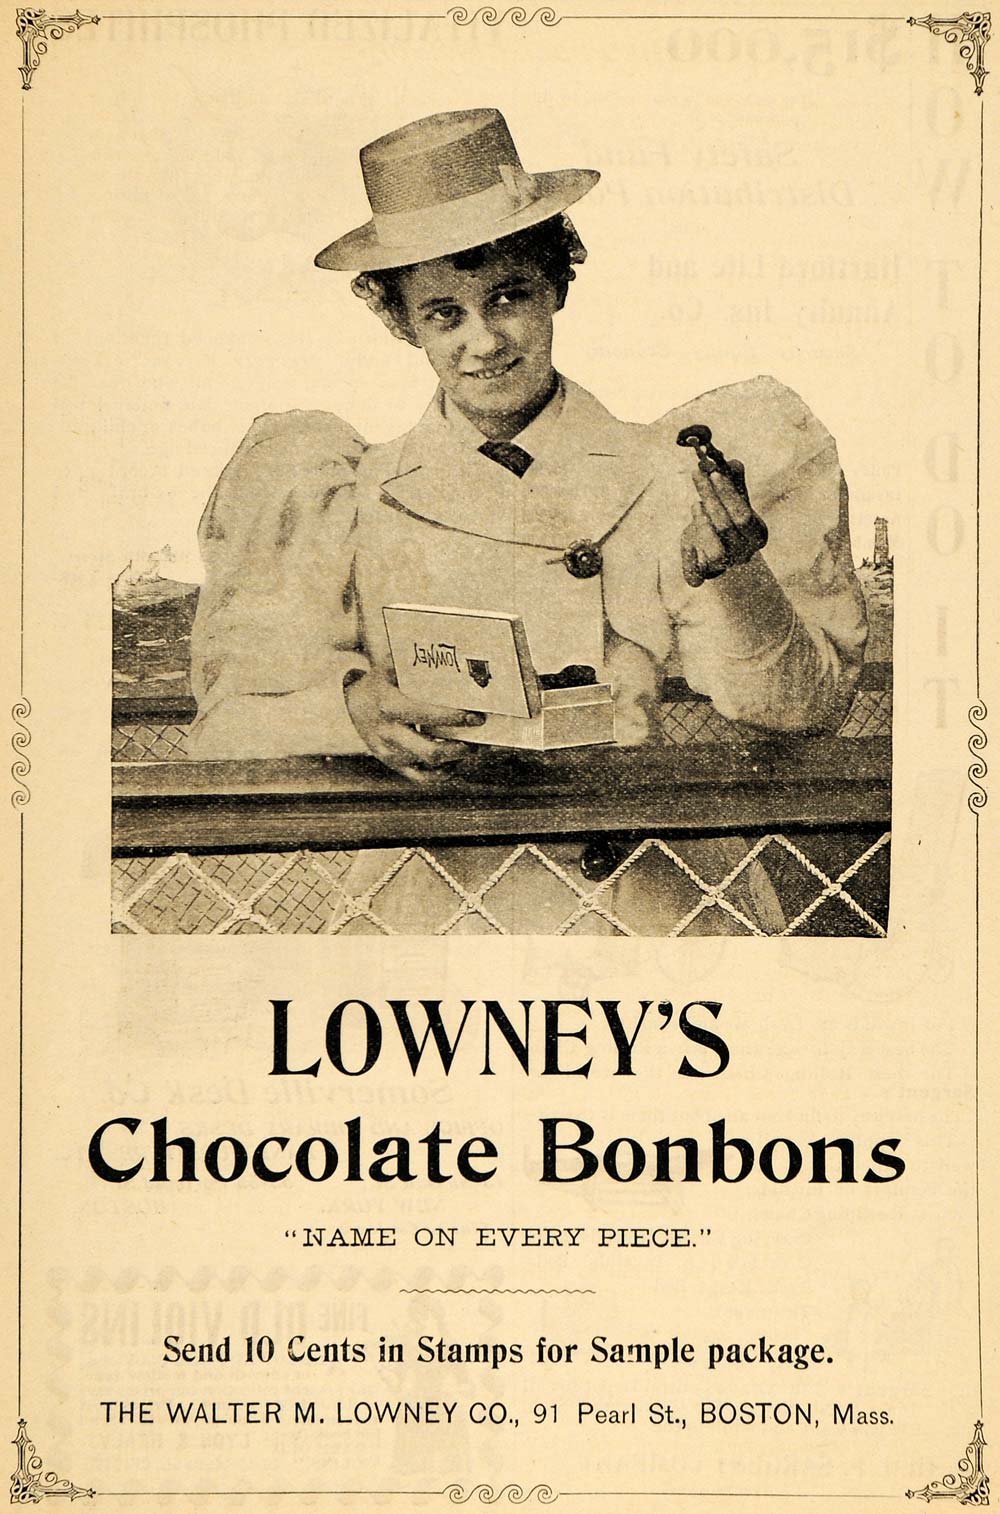 1895 Ad Woman Puffy Coat Hat Lowneys Chocolate Bonbons - ORIGINAL MUN1